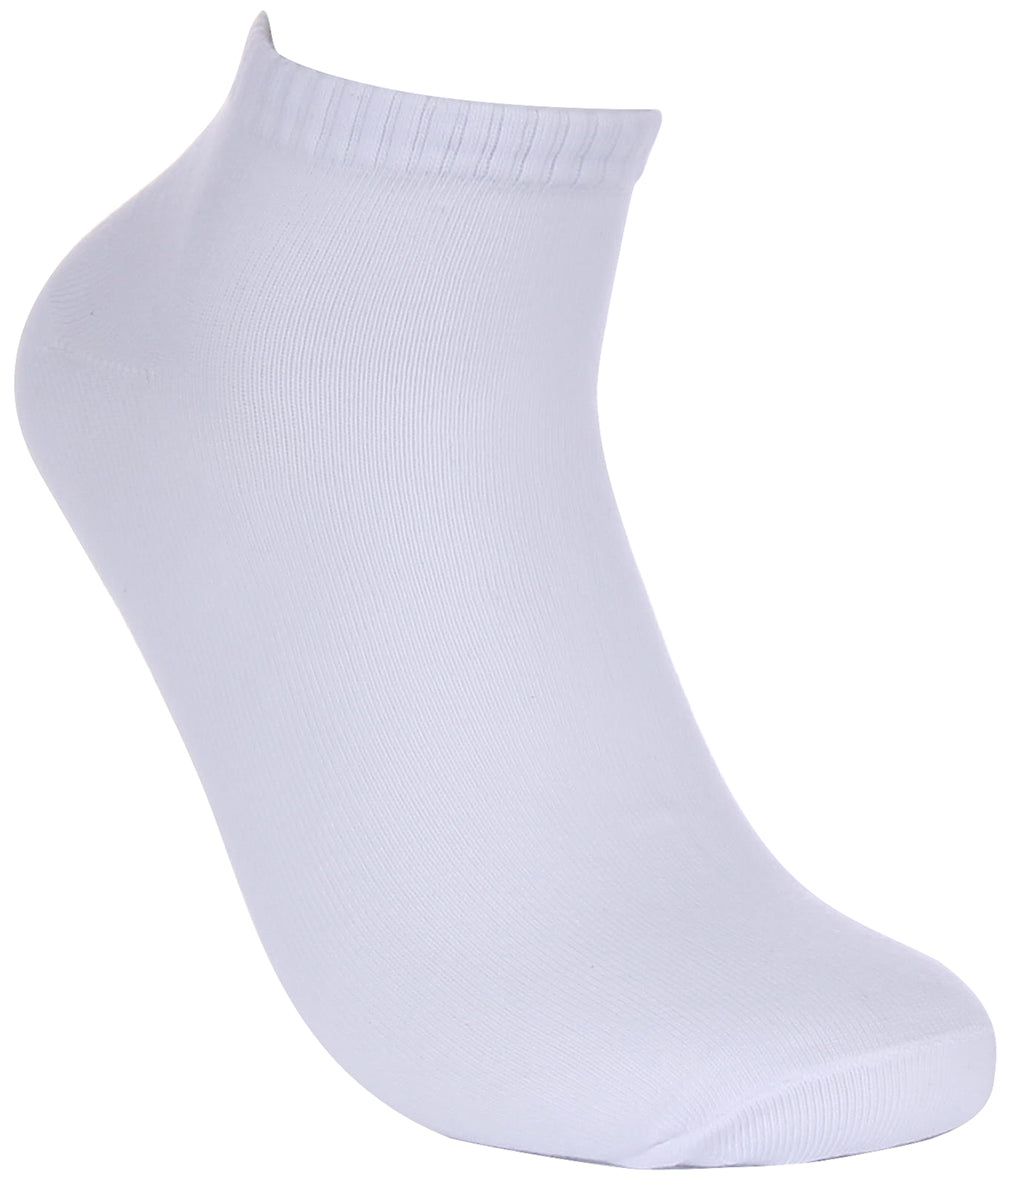 2 Pairs Low Cut Socks In White